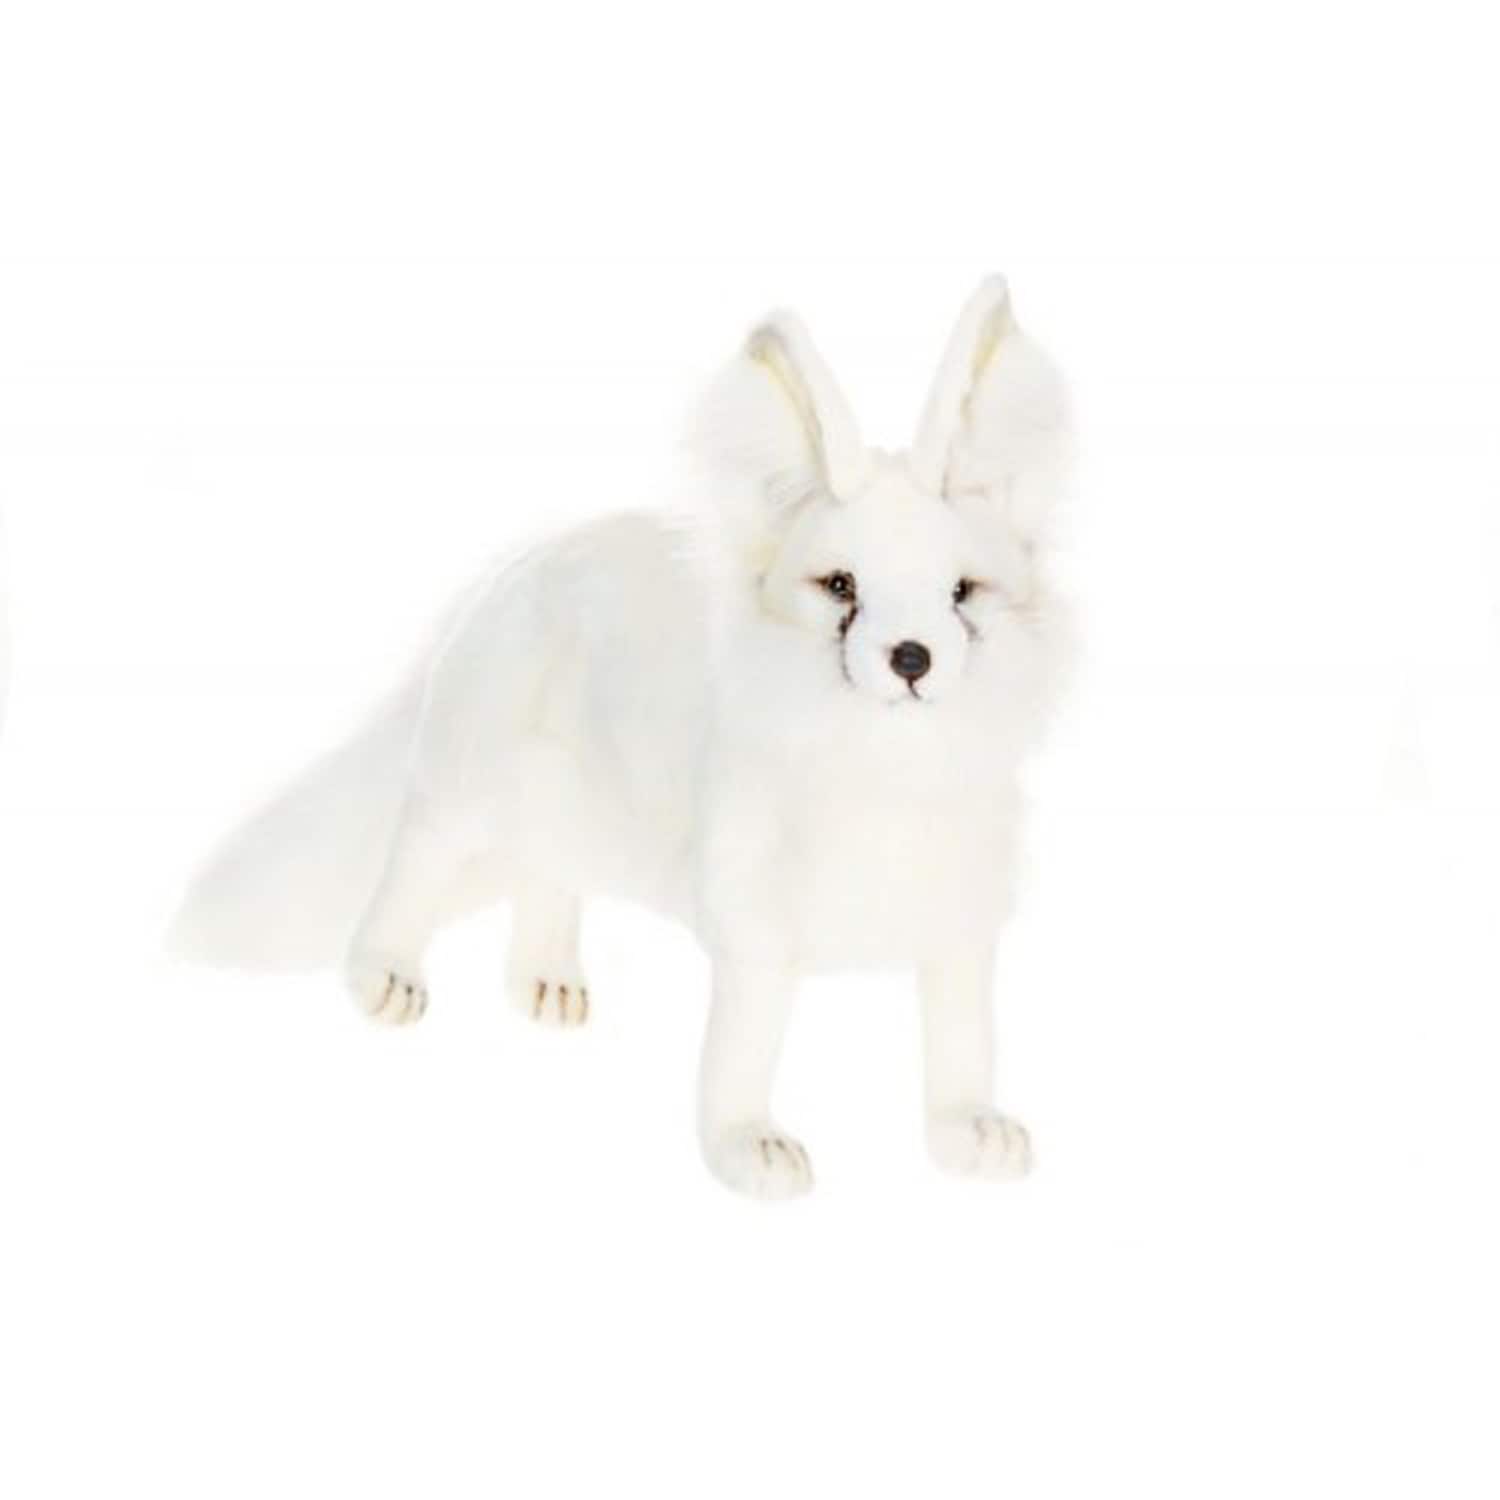 arctic fox soft toy